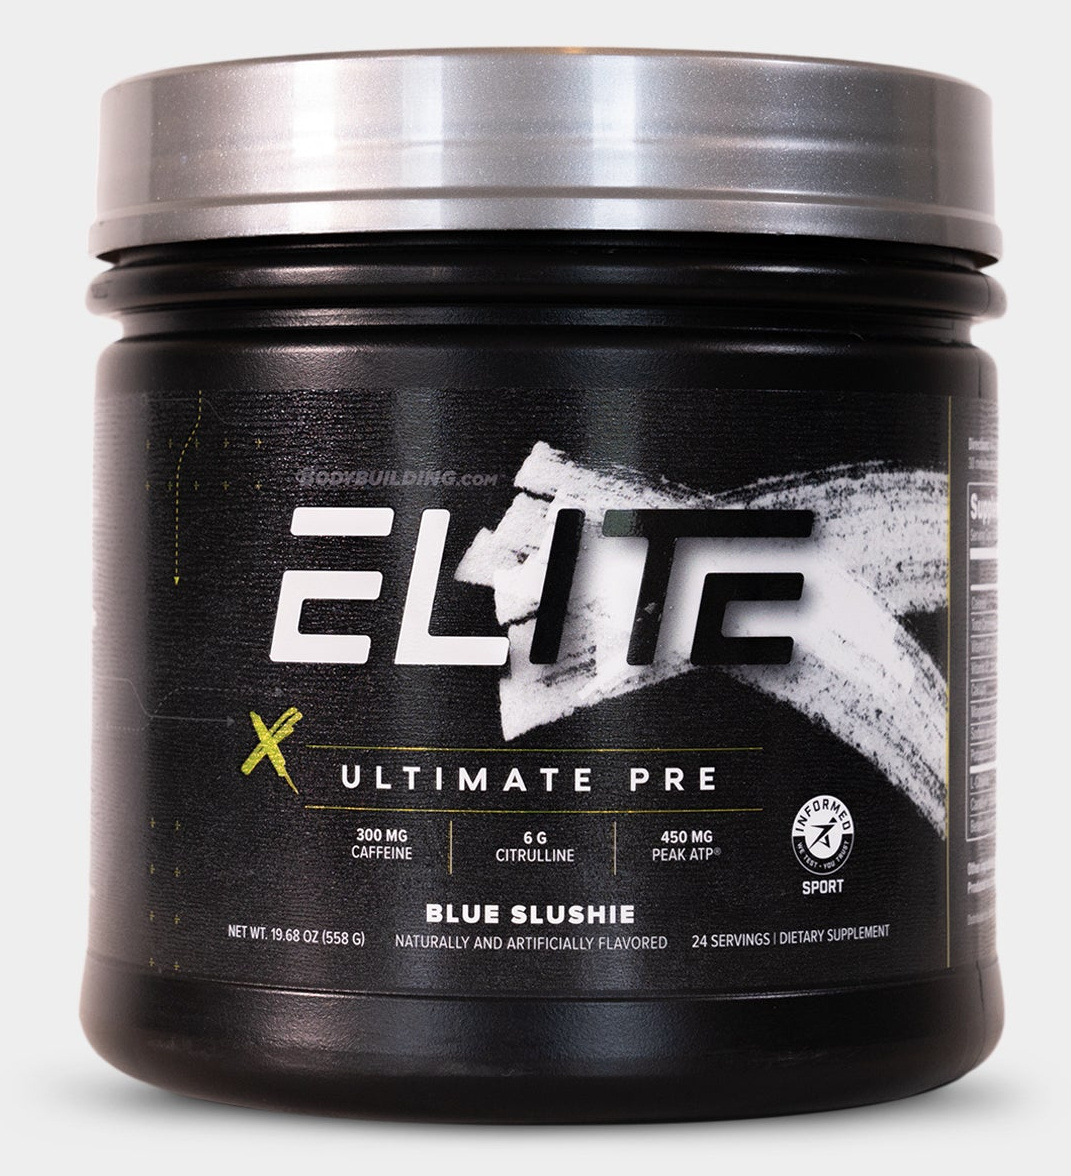 Bodybuilding.com Elite Ultimate PRE-Workouts